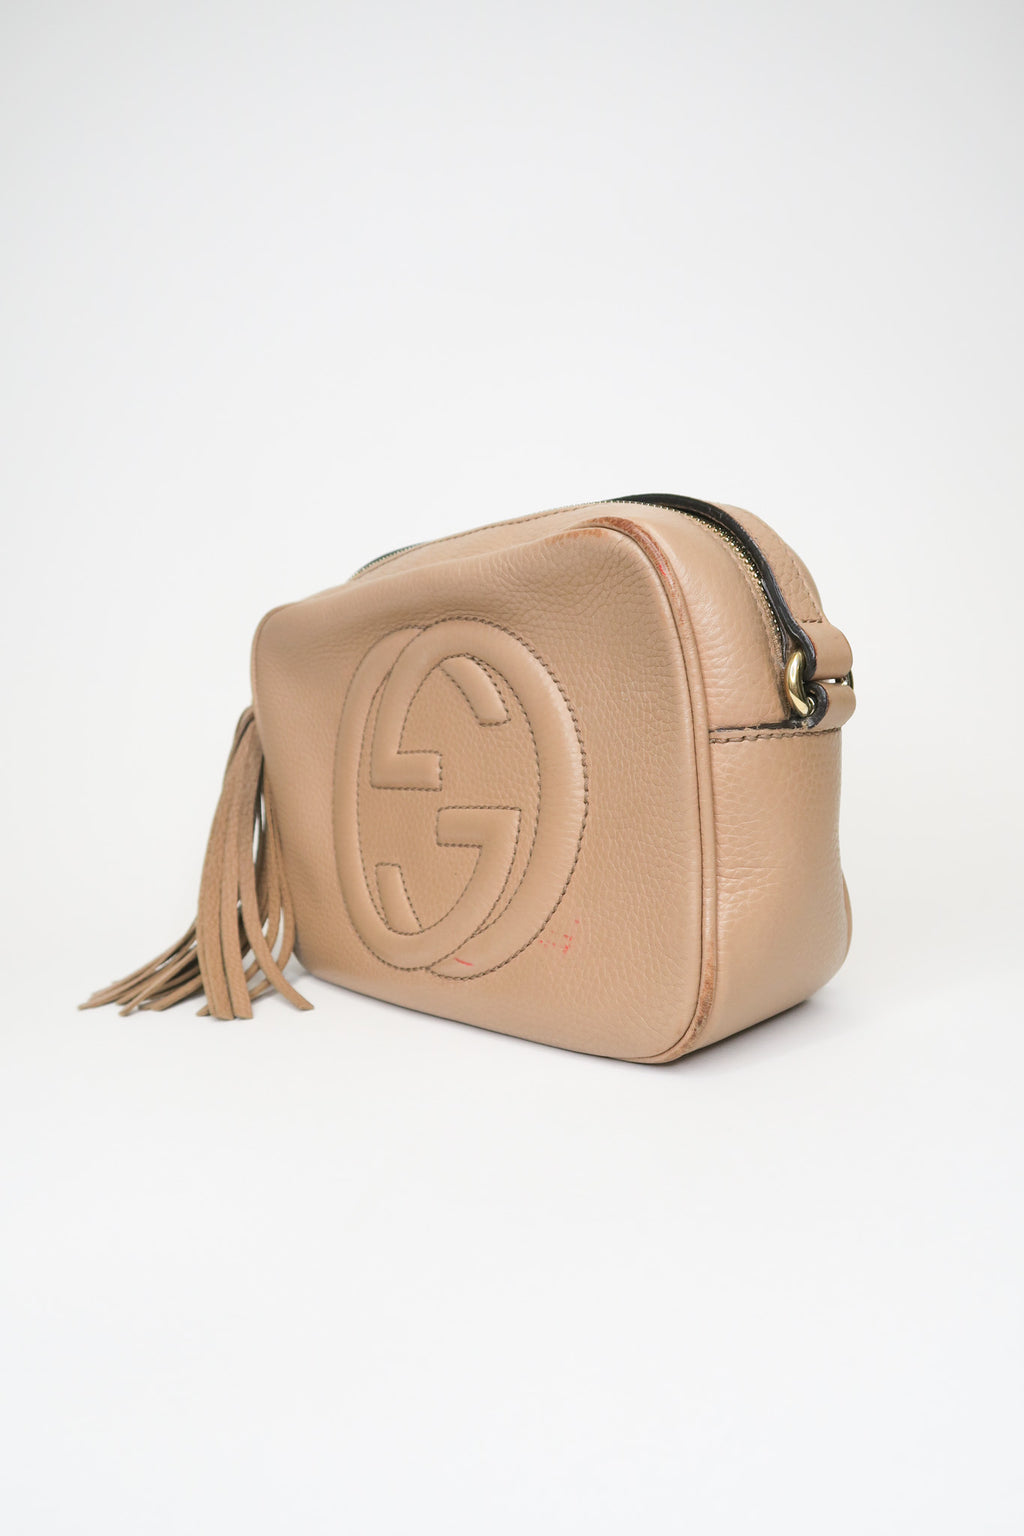 Celine Nano Belt Bag – The Find Studio